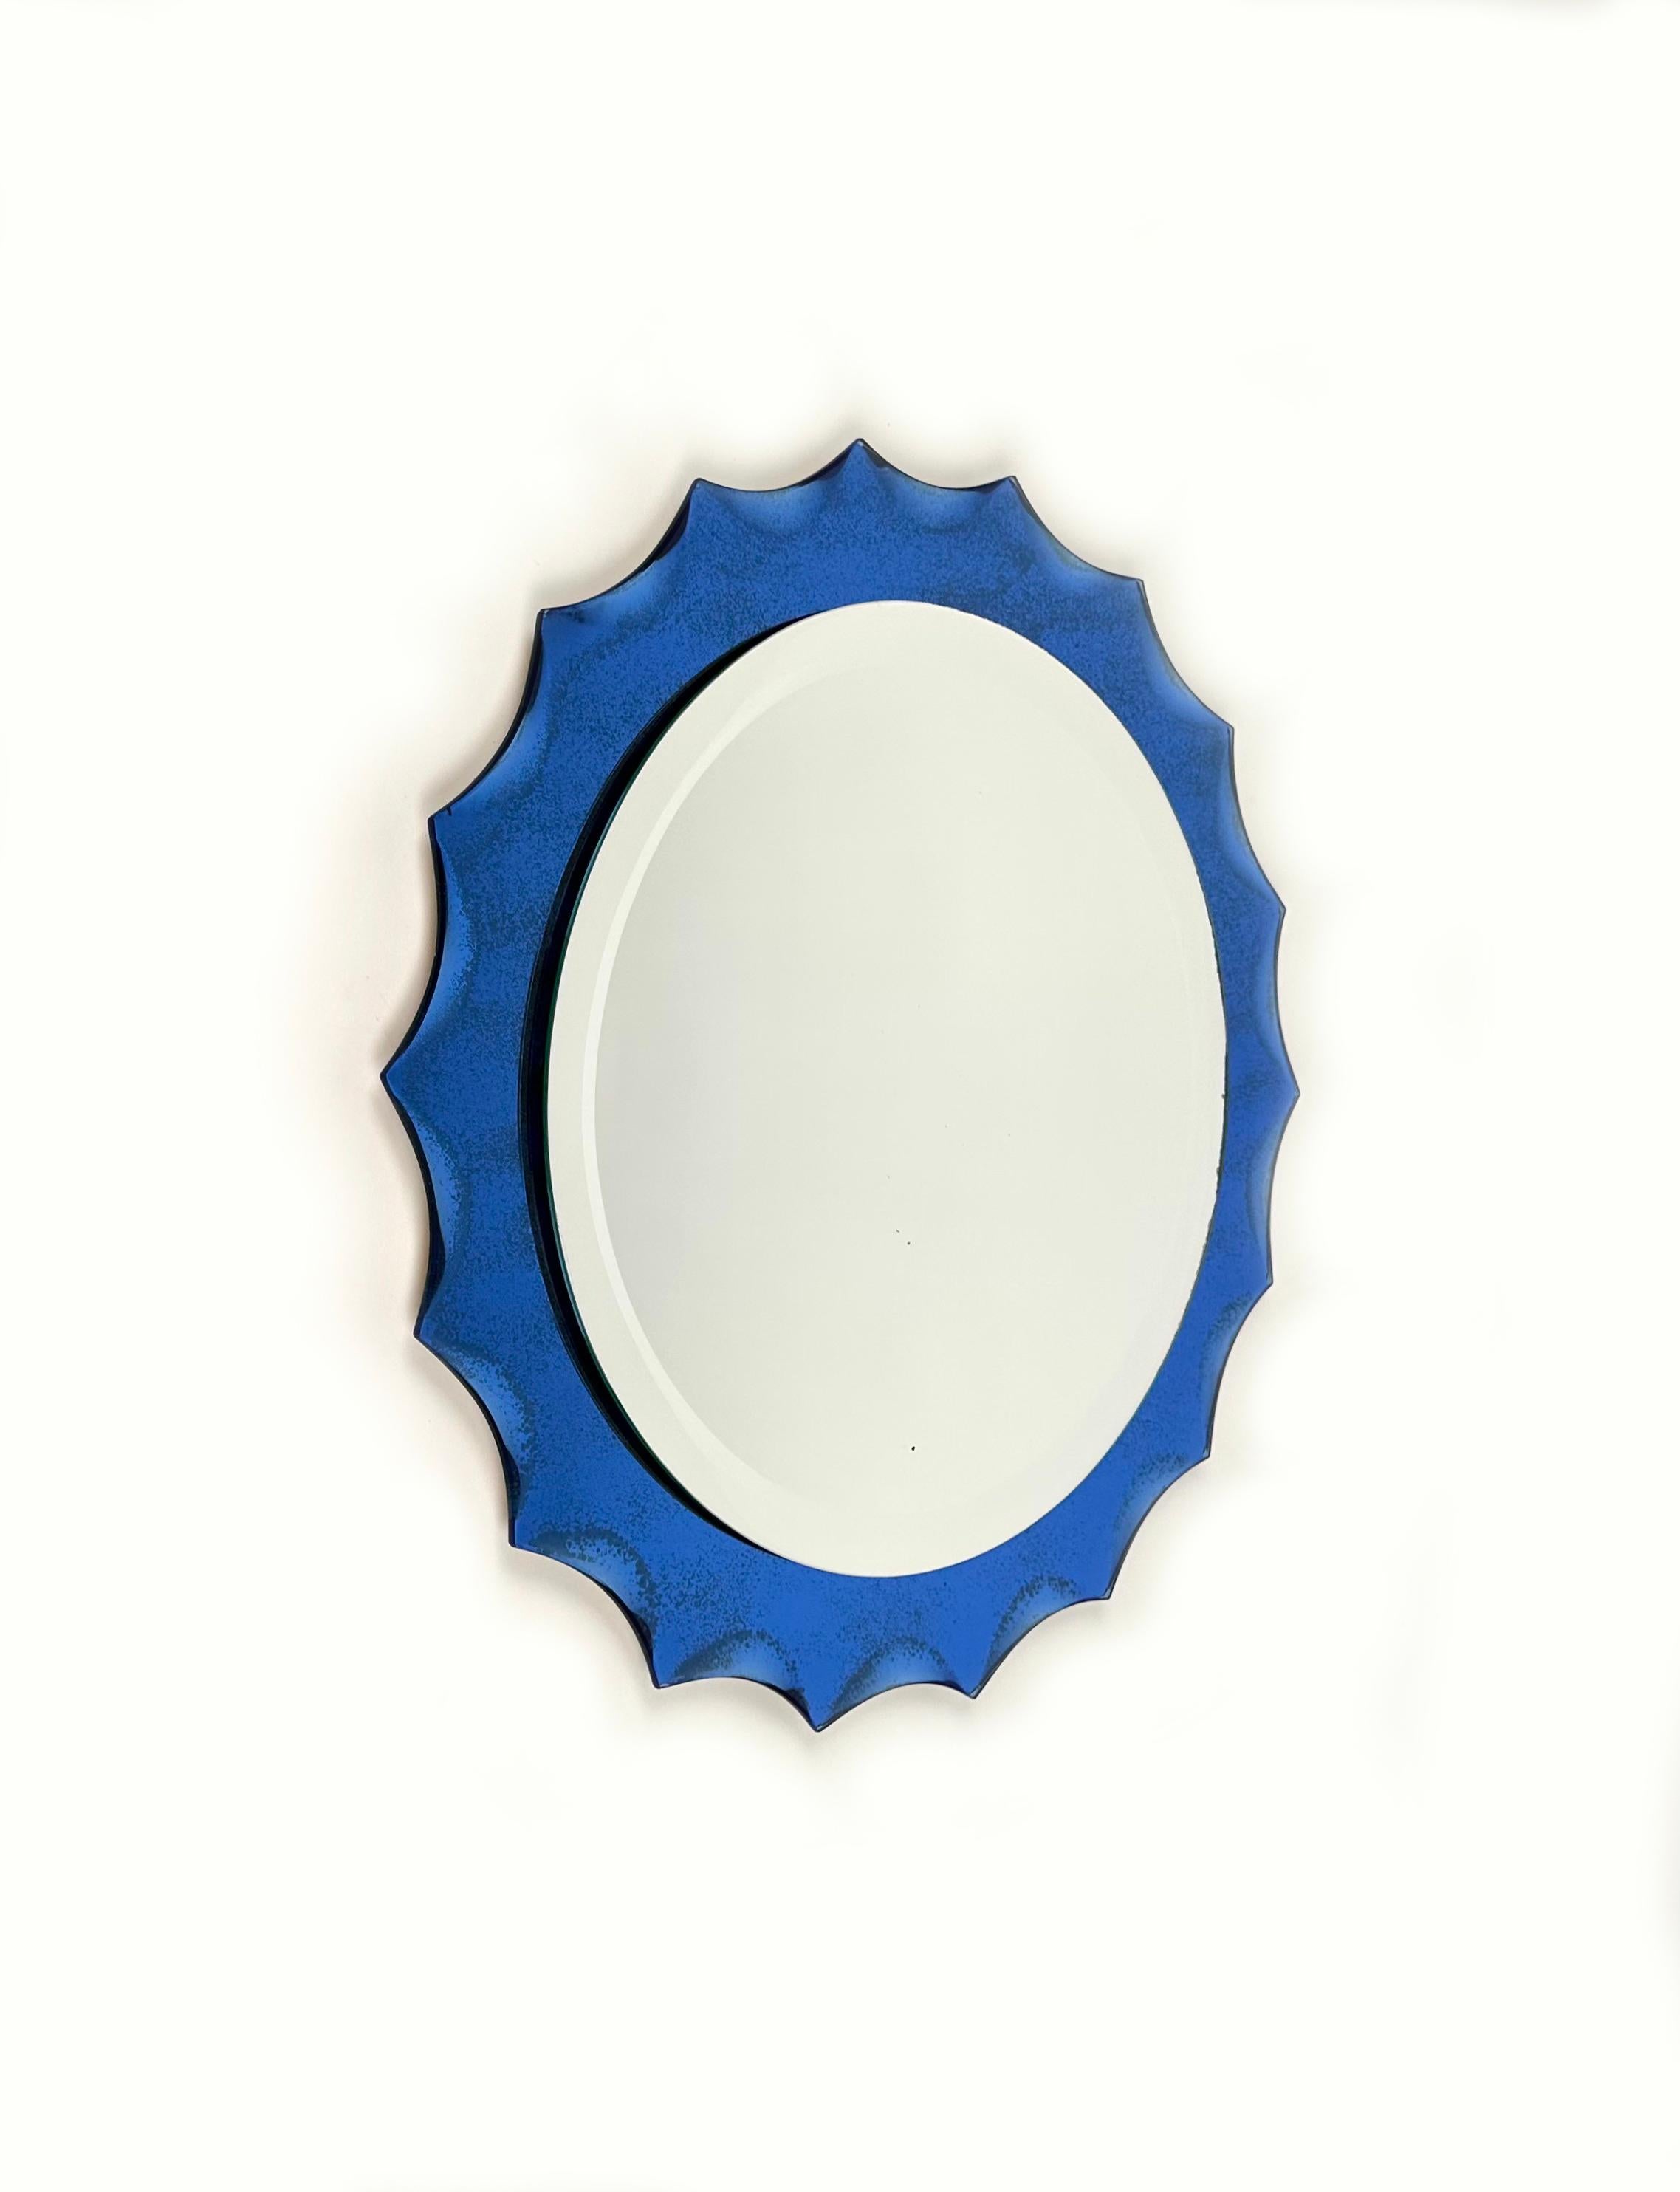 Cobalt Blue Sunburst Wall Mirror Fontana Arte Style, Italy, 1960s For Sale 5